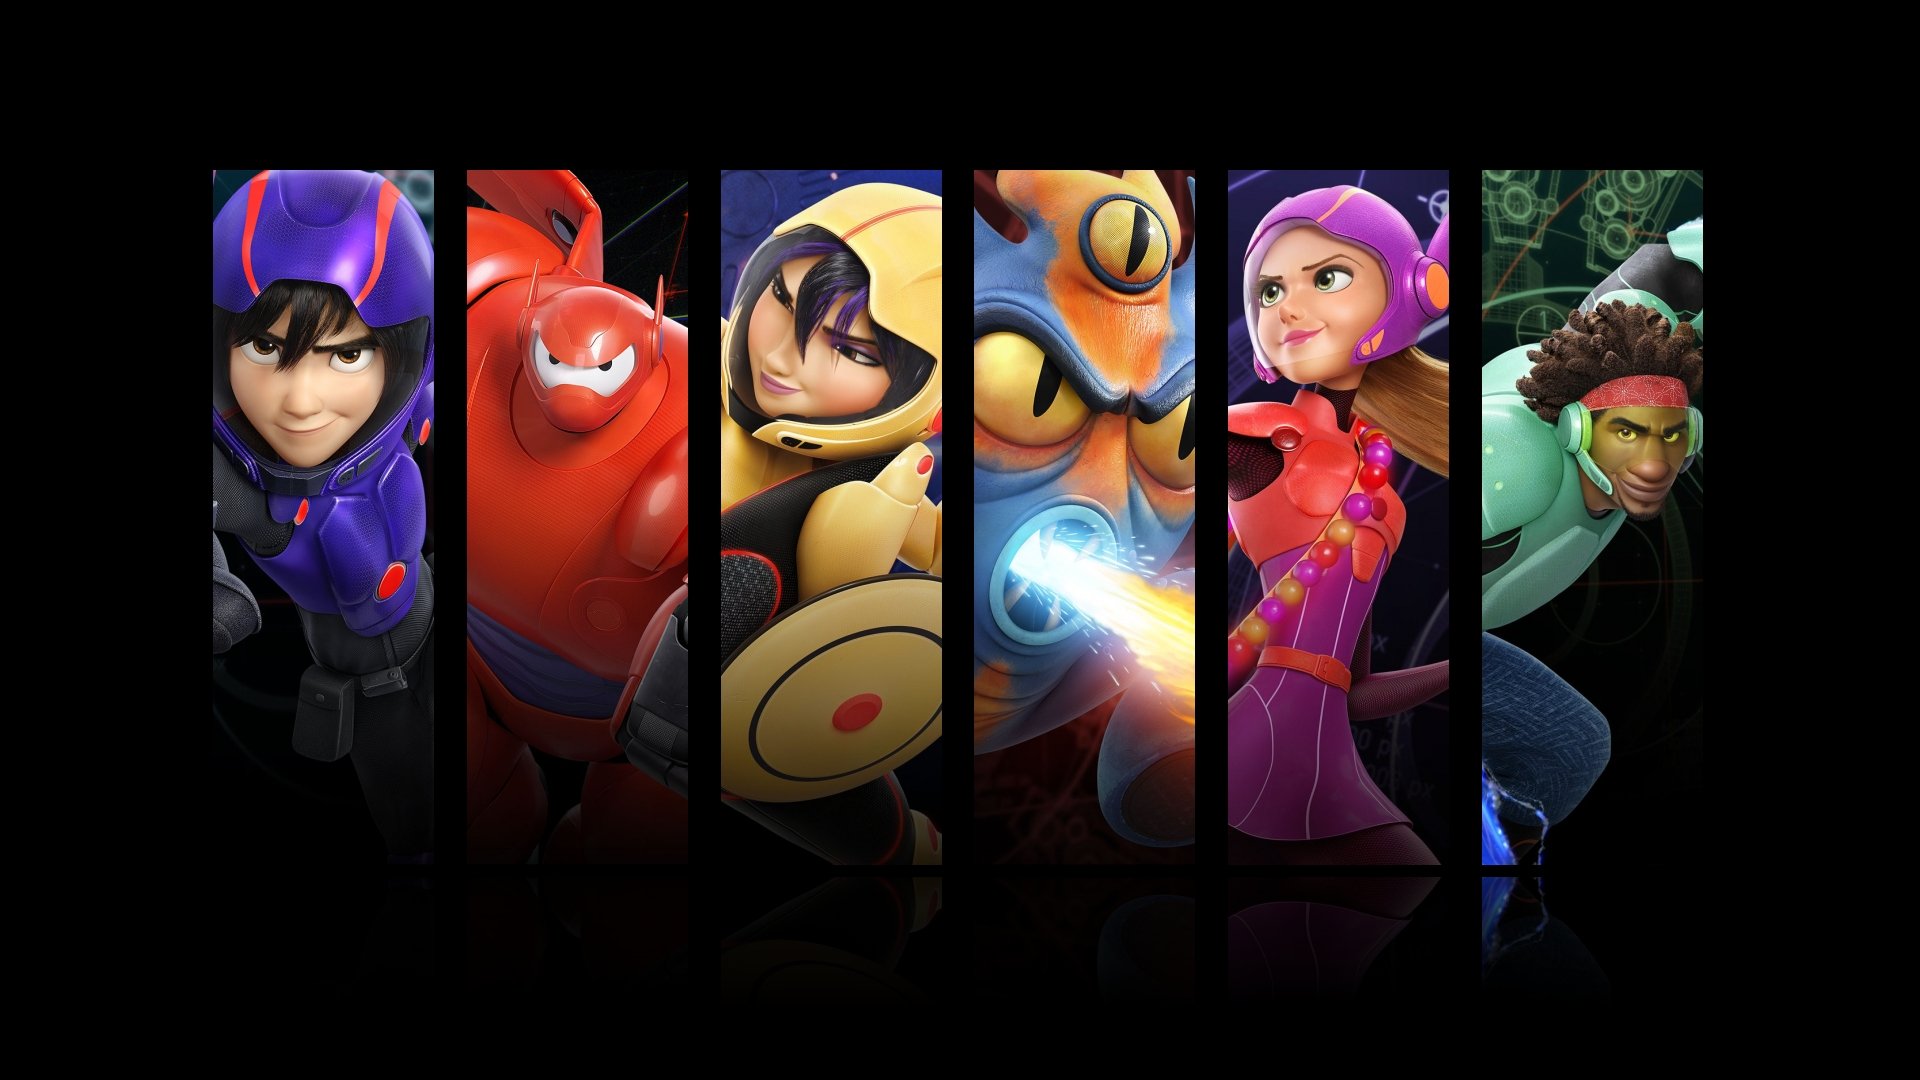 big hero 6, Animation, Action, Adventure, Disney, Robot, Superhero, Big, Hero, Futuristic Wallpaper